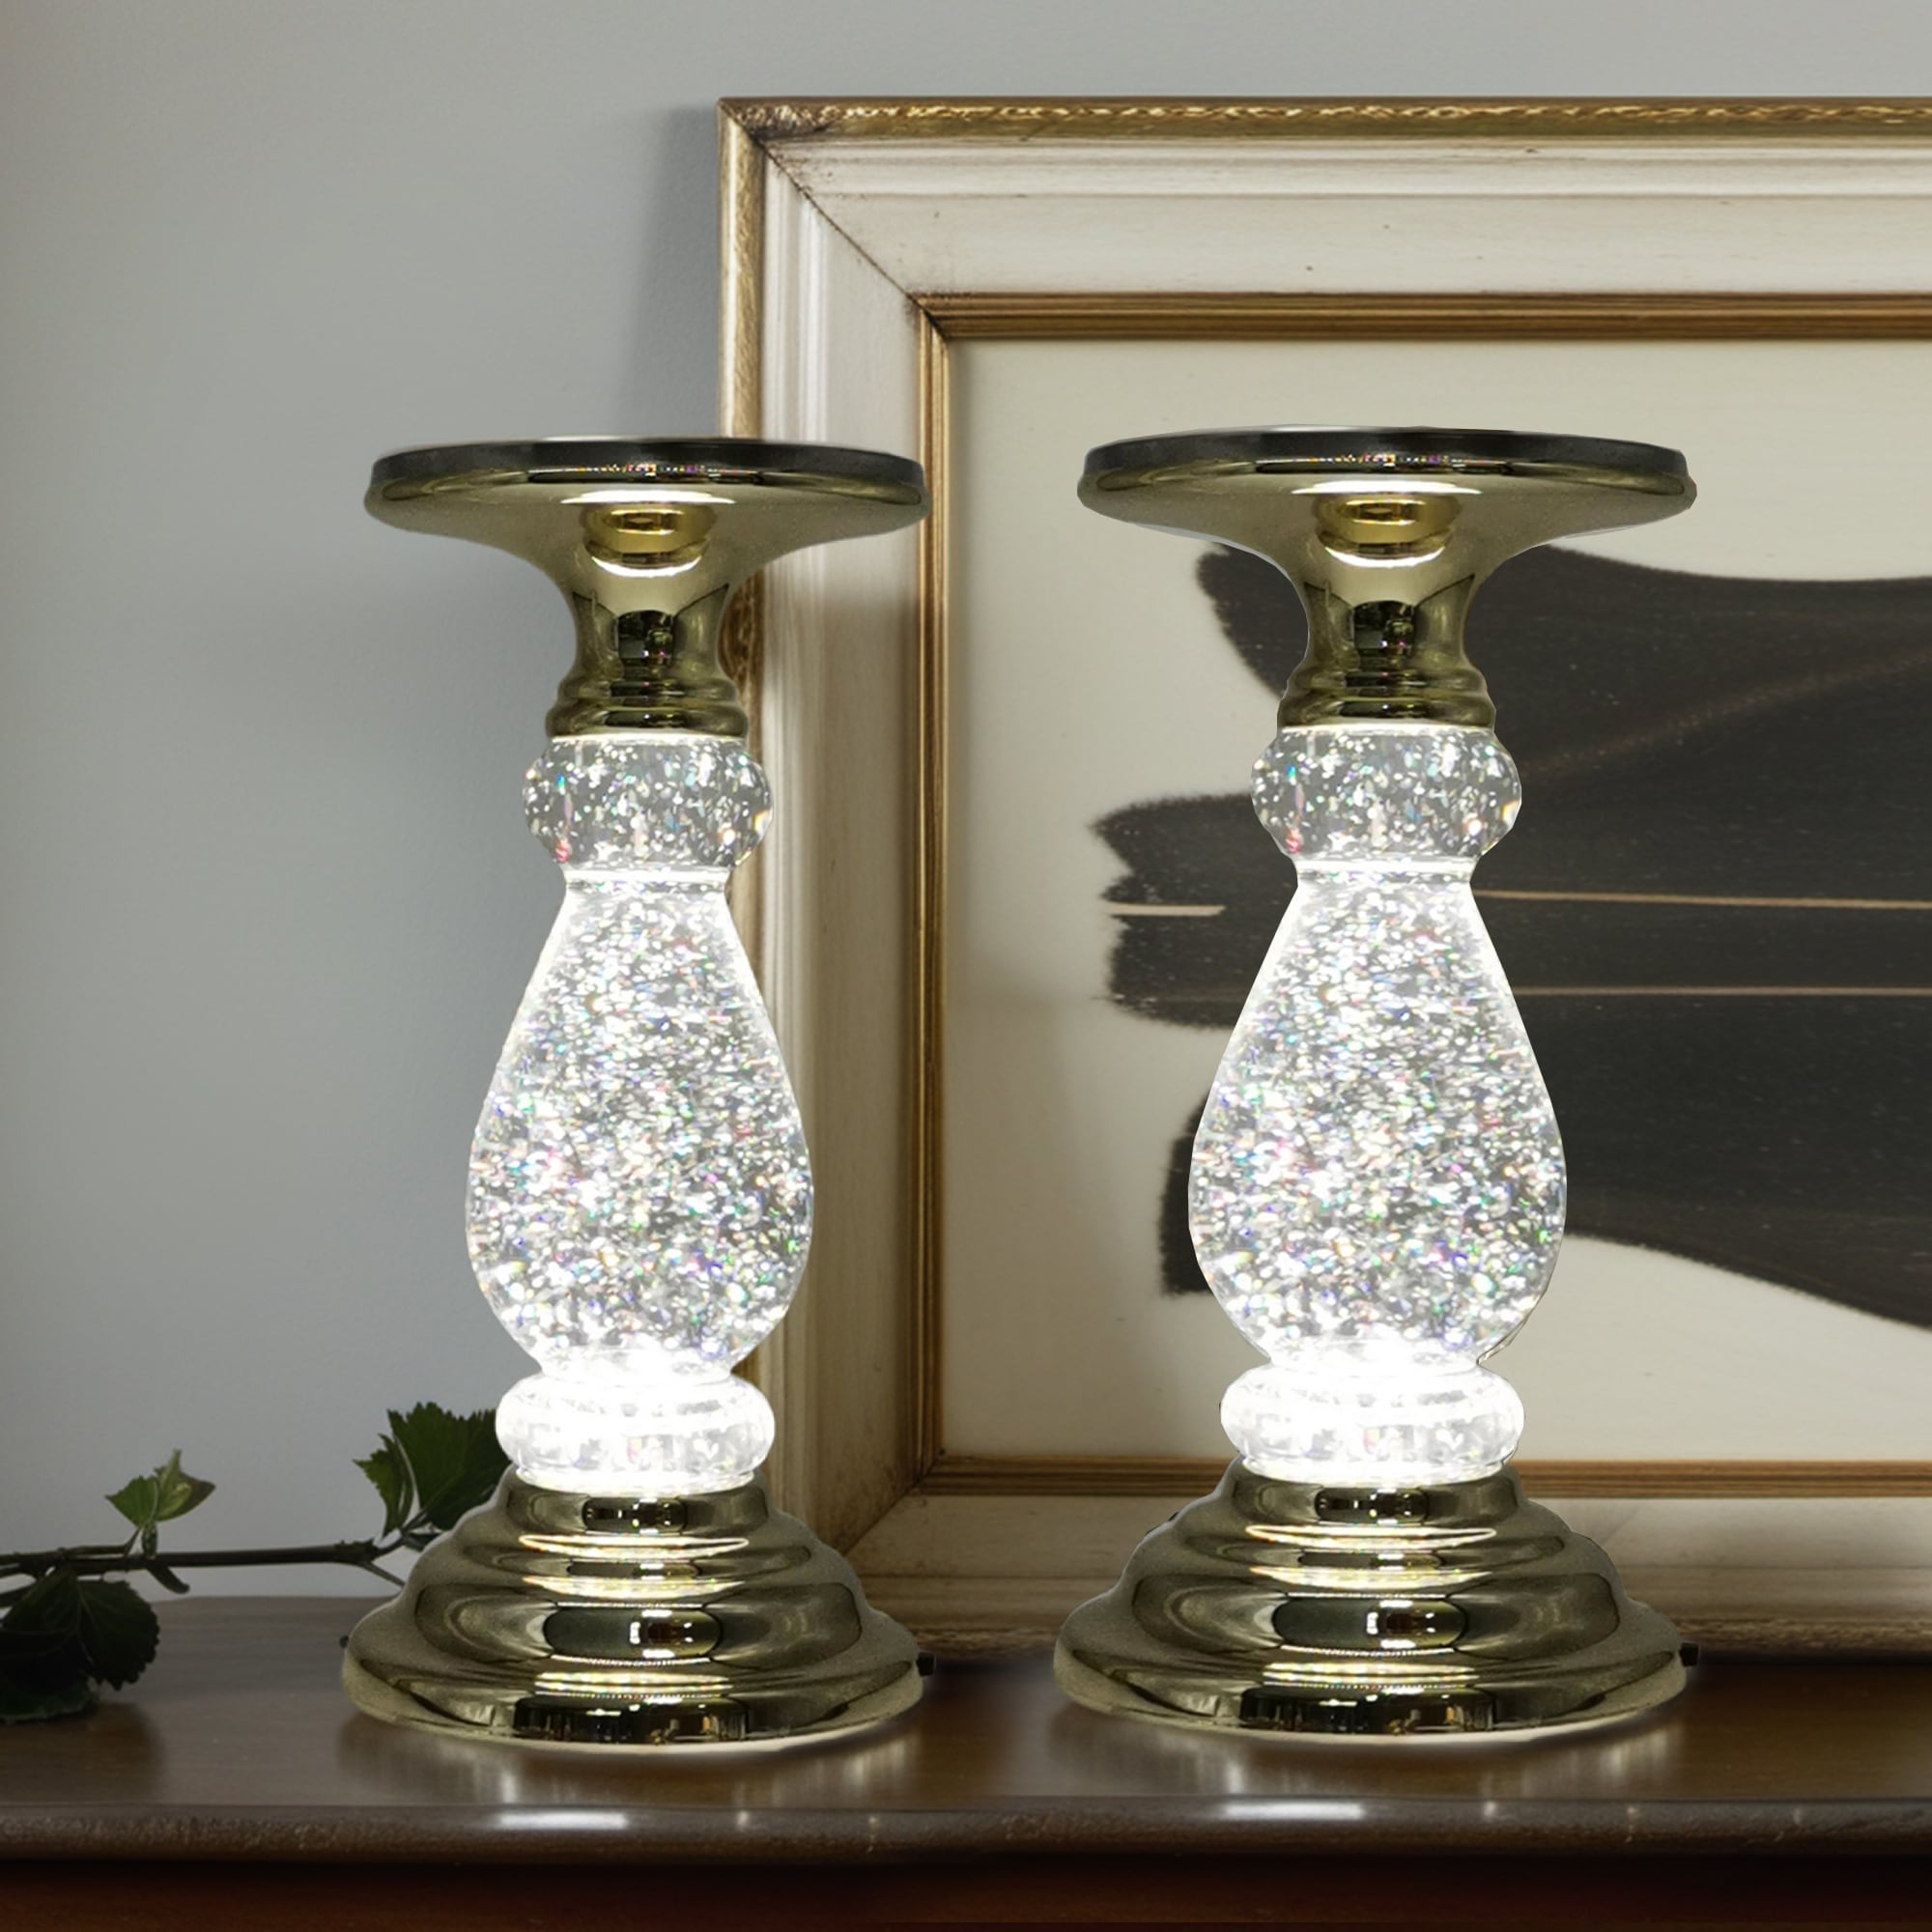 Gold Glitter Ornament Scented Candle - Siberian Fir 3.5